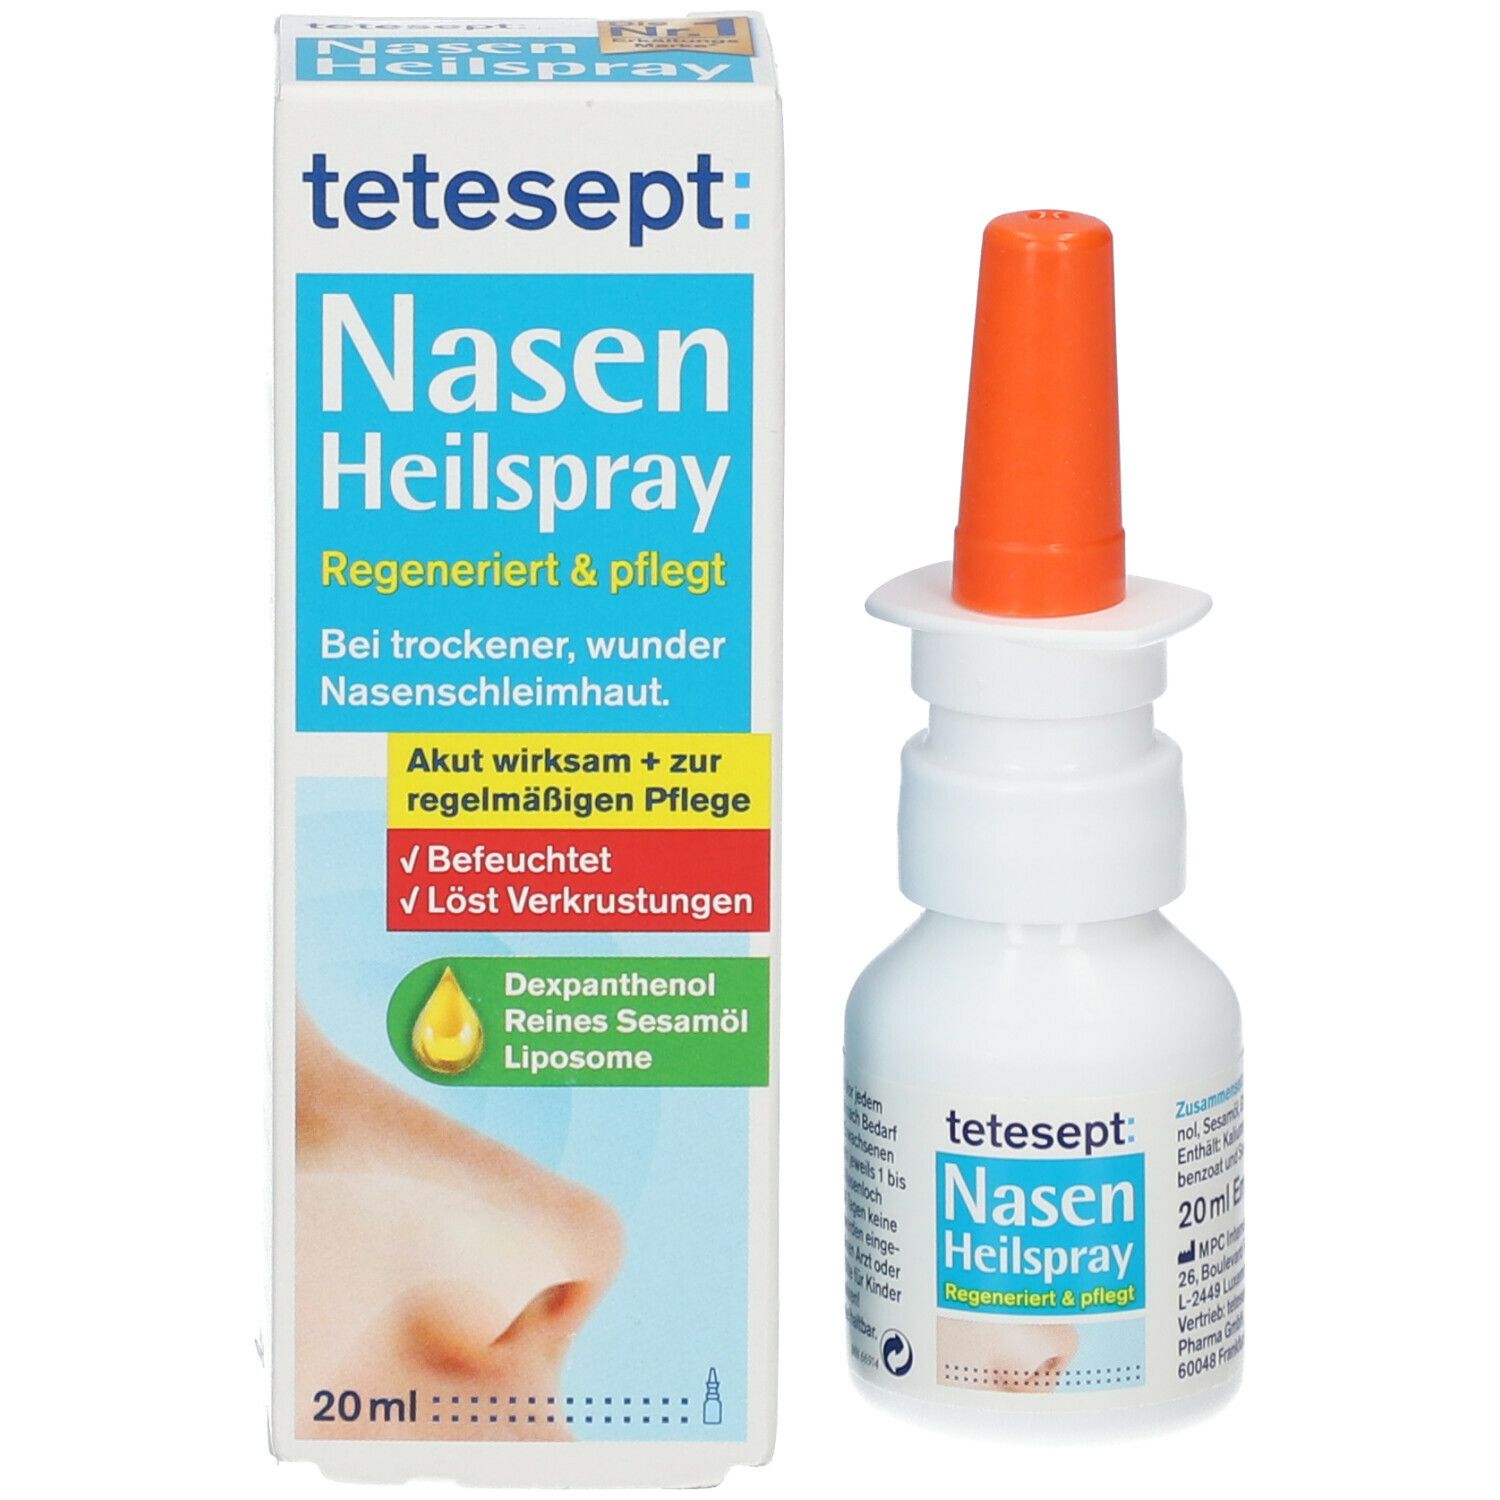 tetesept® Nasen Heilspray